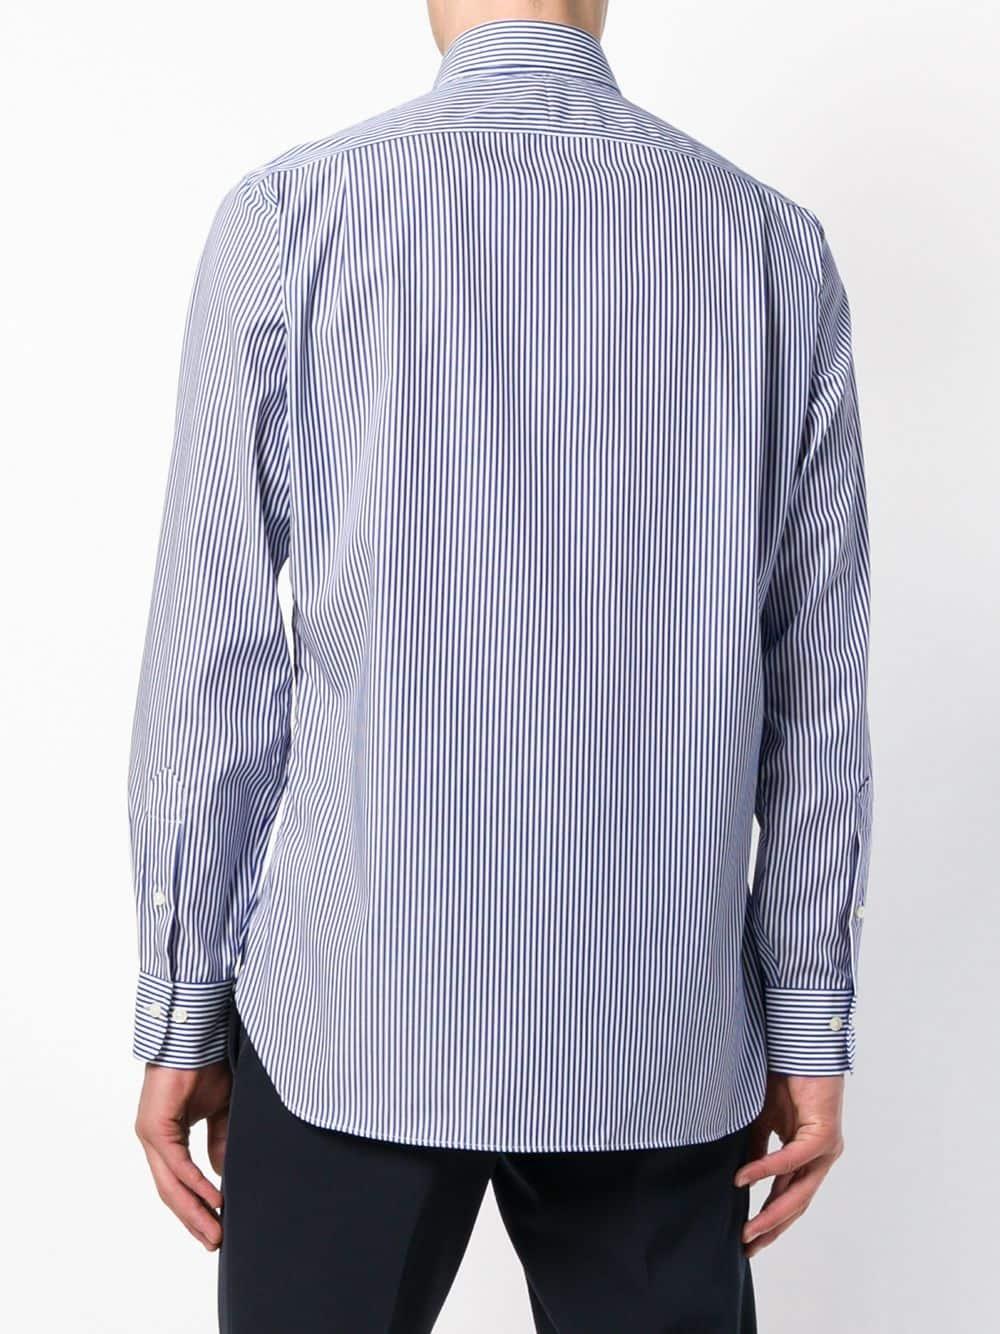 Polo Ralph Lauren Pinstripe Shirt in Blue for Men - Lyst